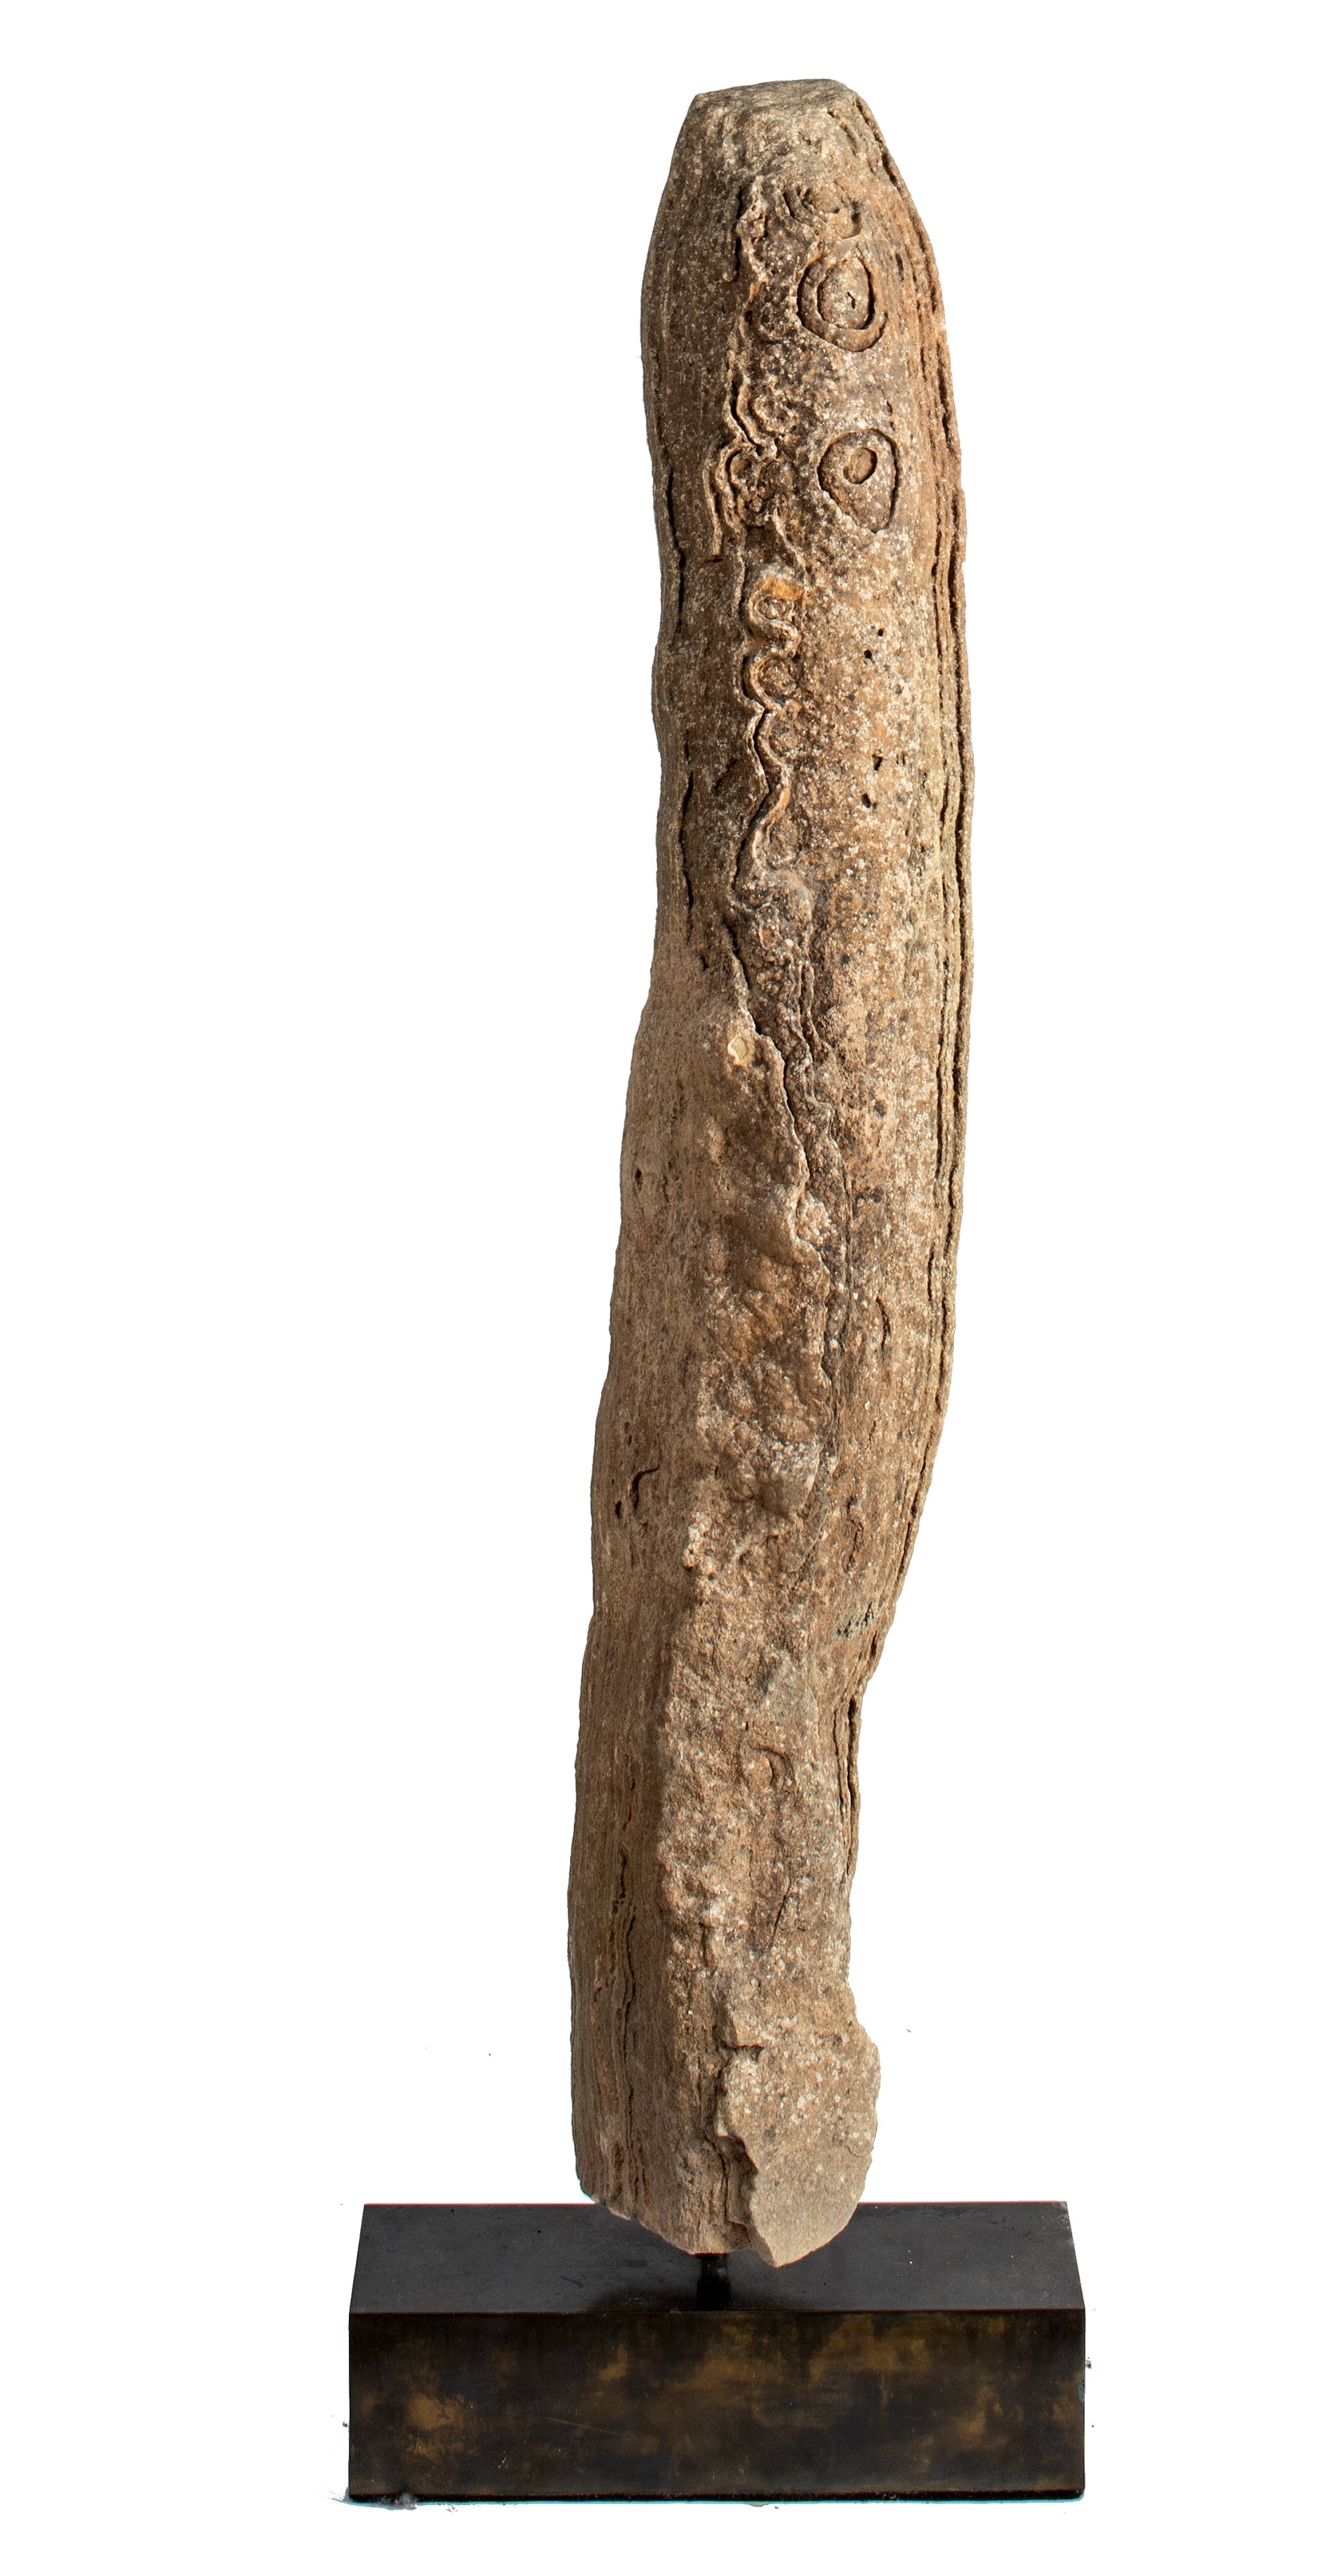 A gypsum stalactite on stand